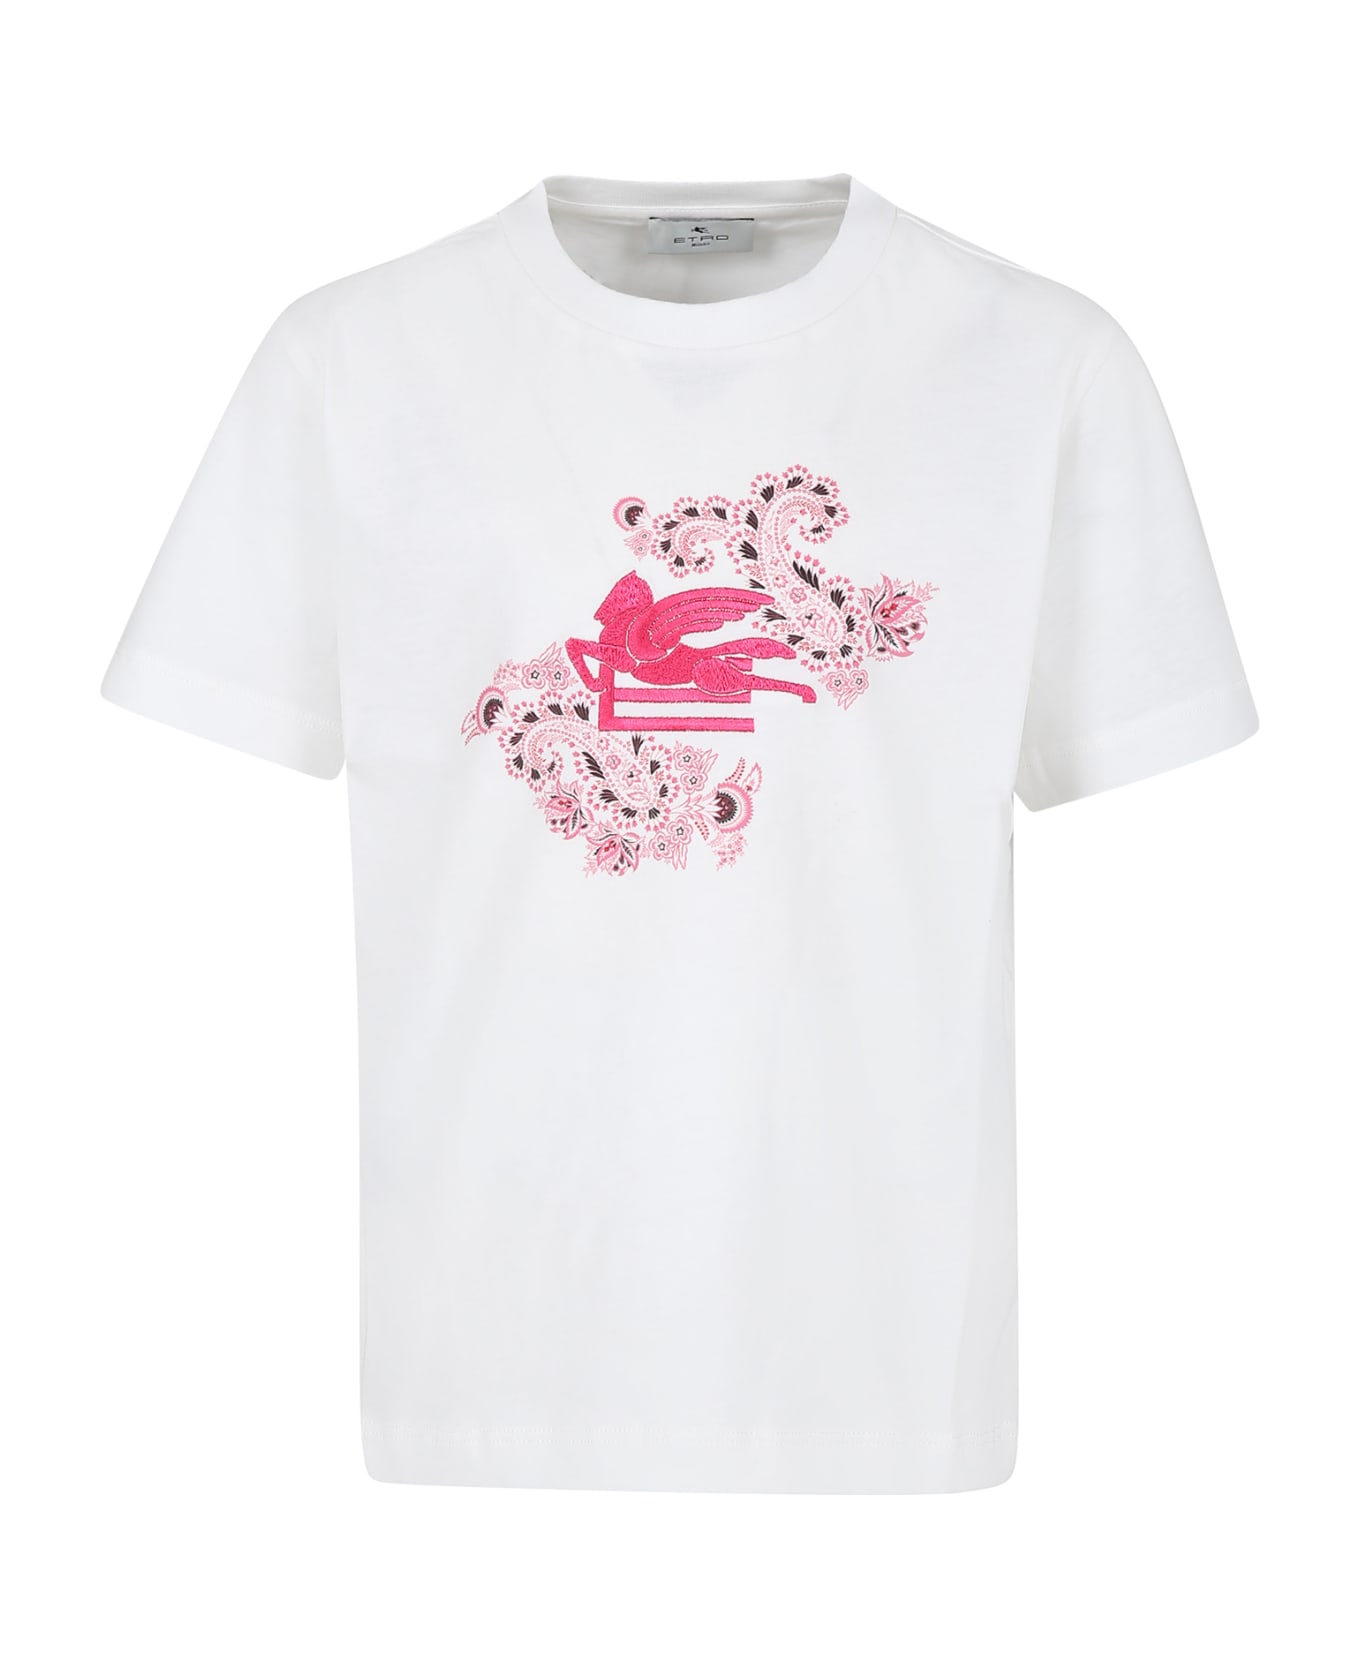 Etro Ivory T-shirt For Girl With Pegasus - Ivory